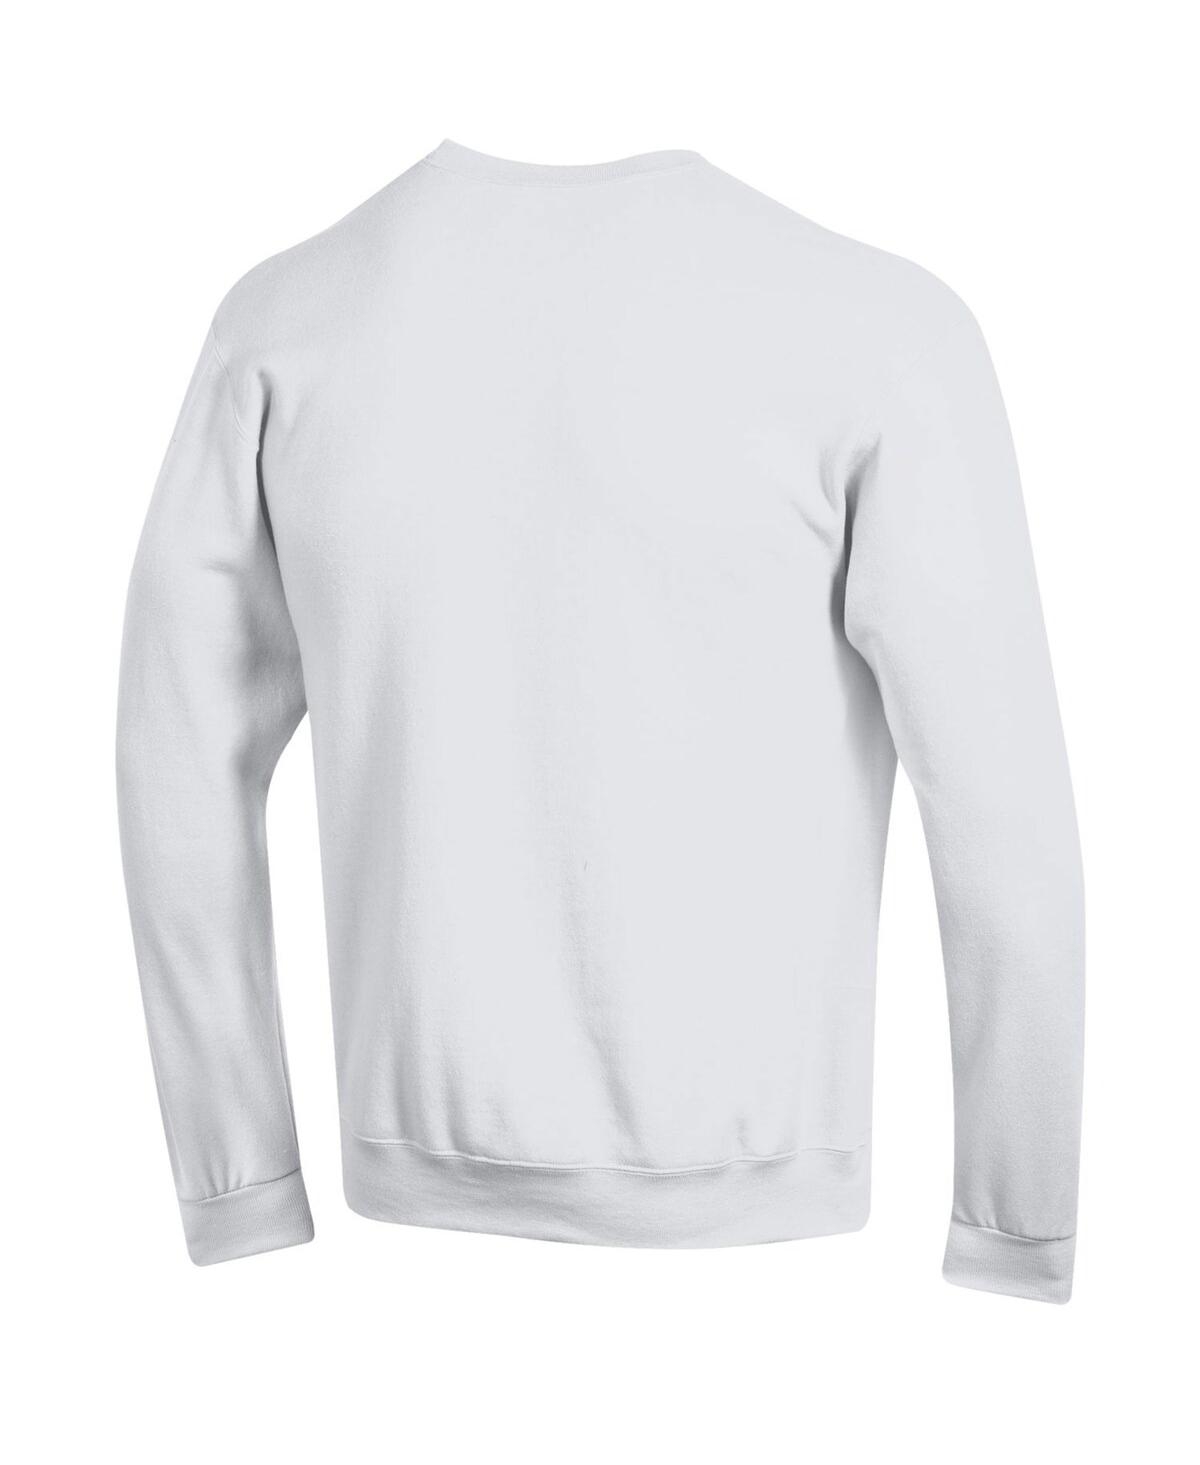 Shop Champion Men's  White Colorado Buffaloes Primary Logo Pullover Sweatshirt